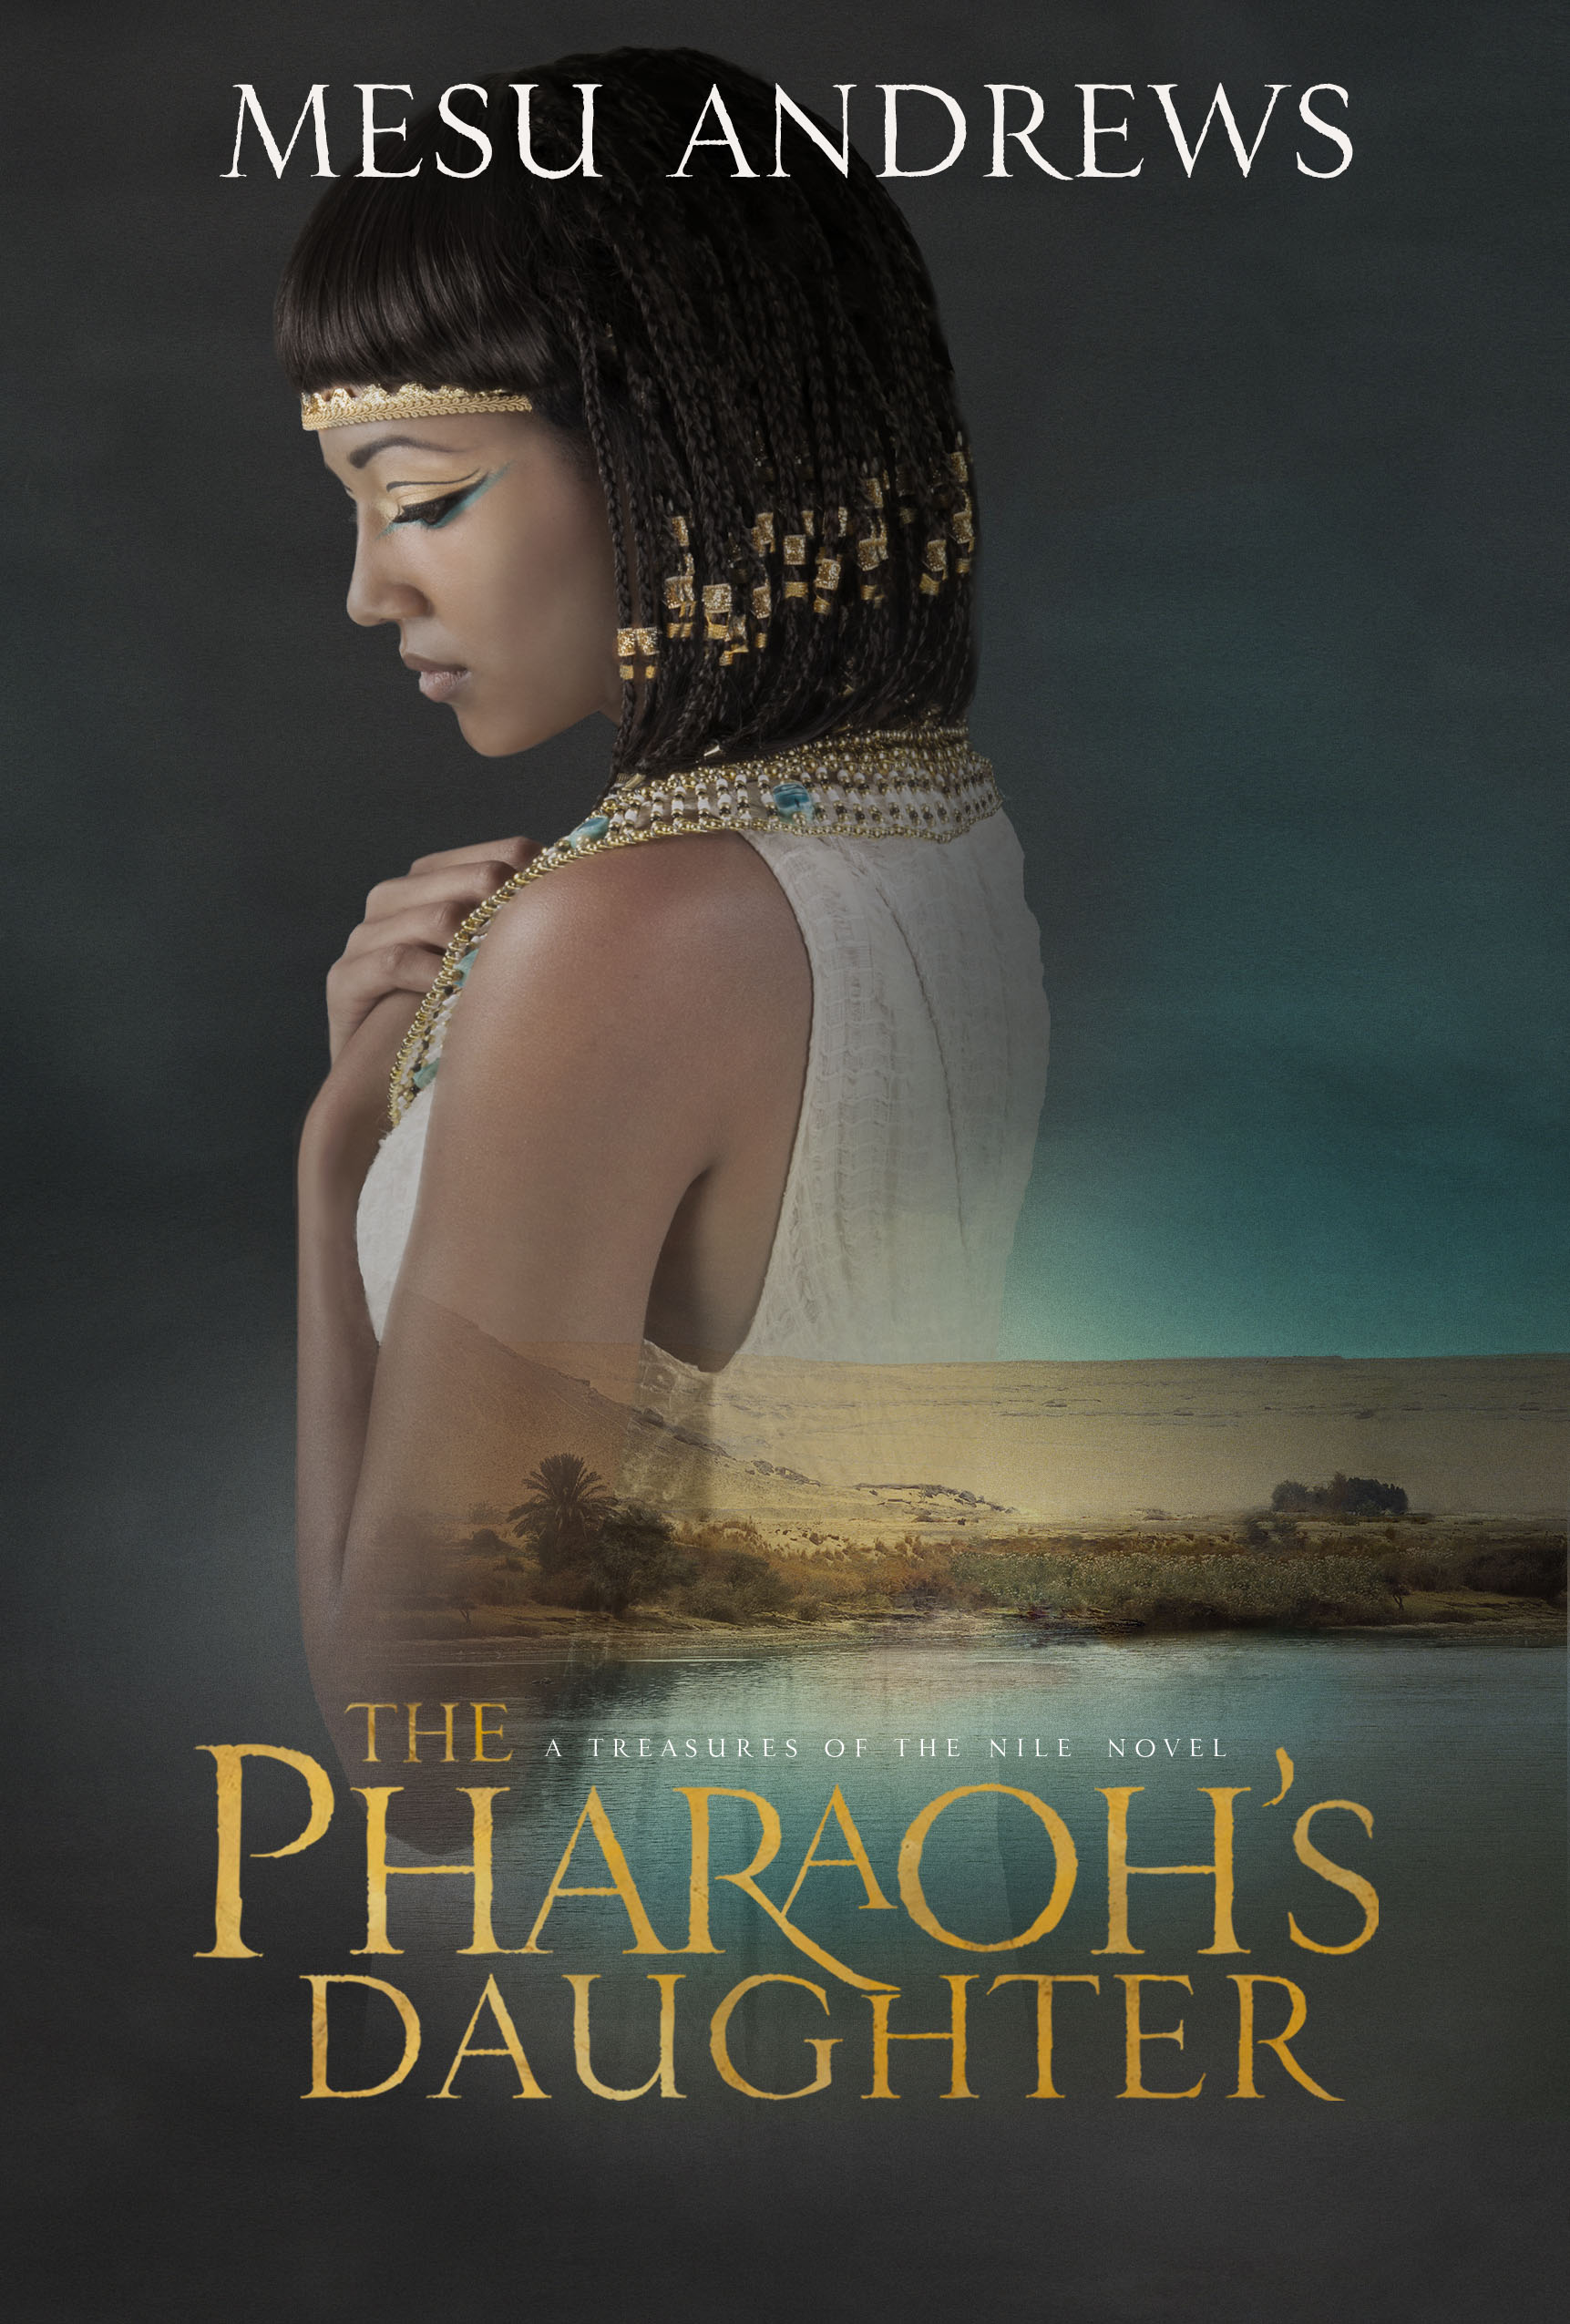 Pharaoh's daughter cover